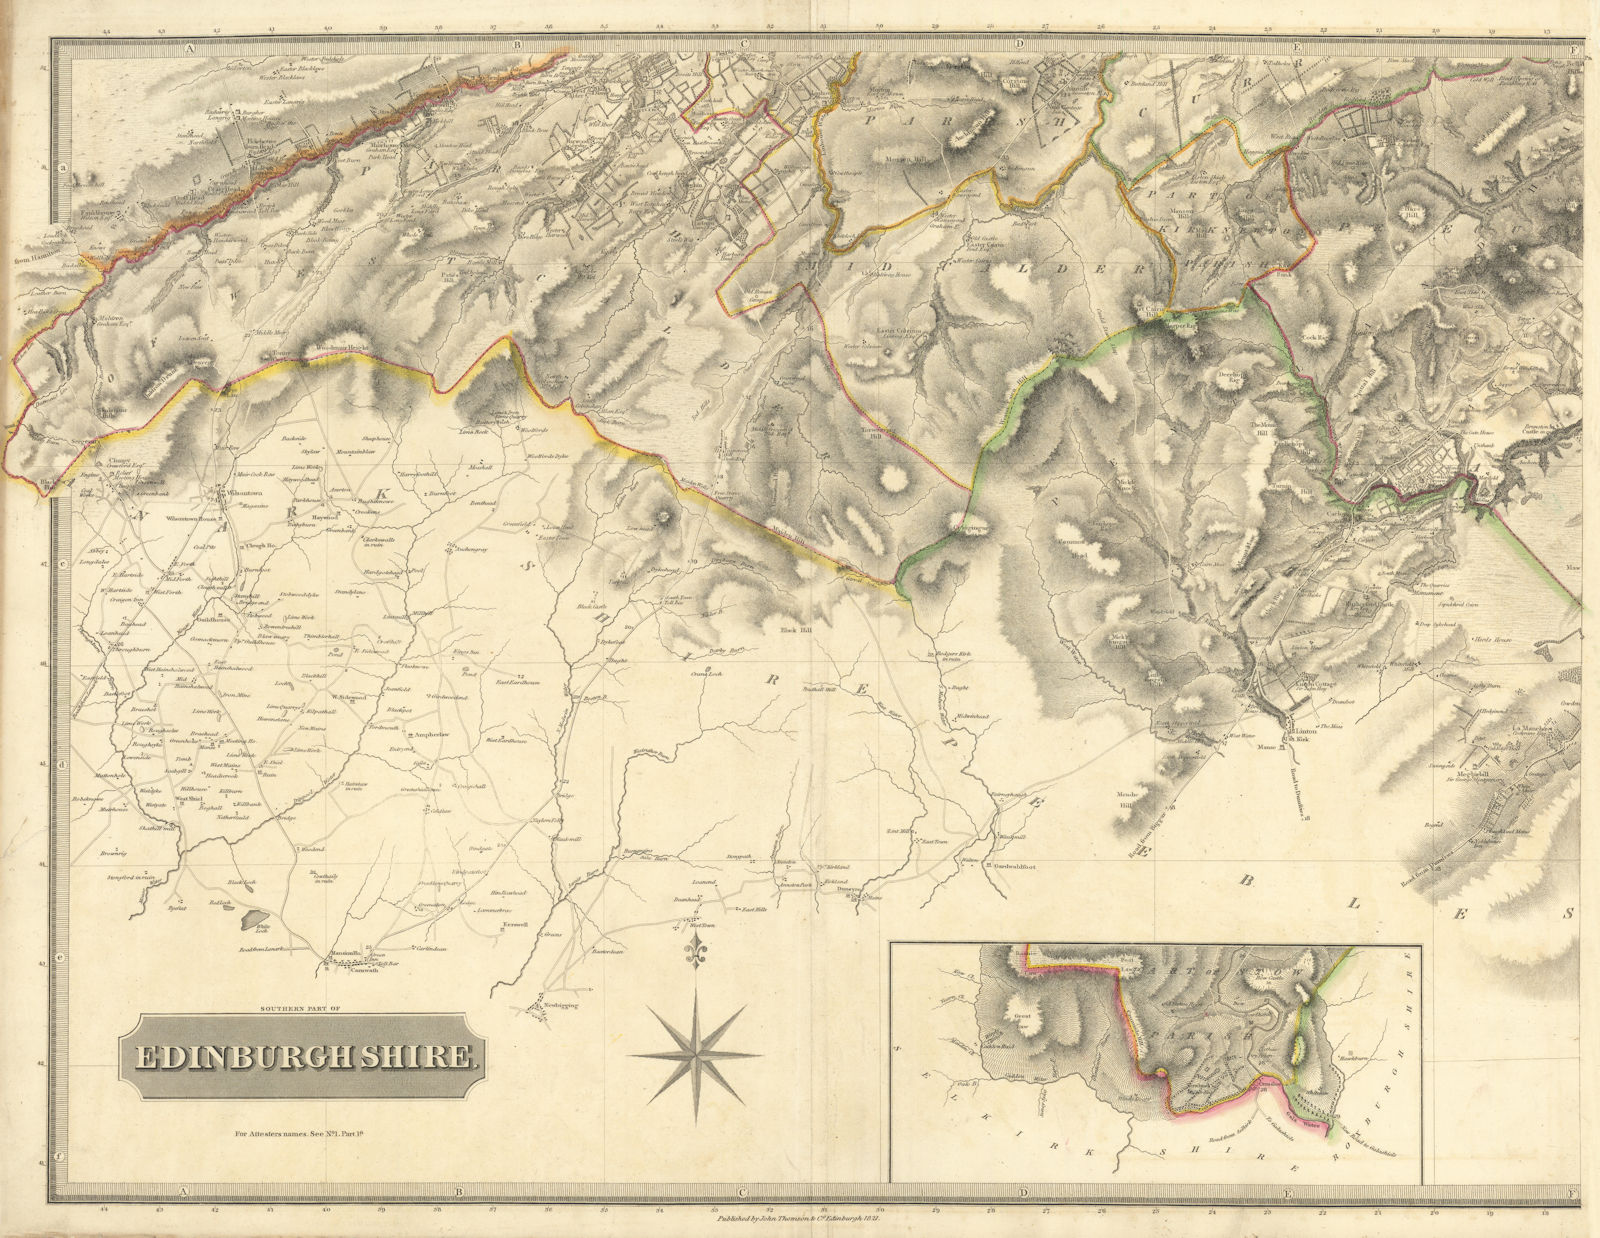 Edinburghshire south-west sheet. Midlothian. West Linton. THOMSON 1832 old map